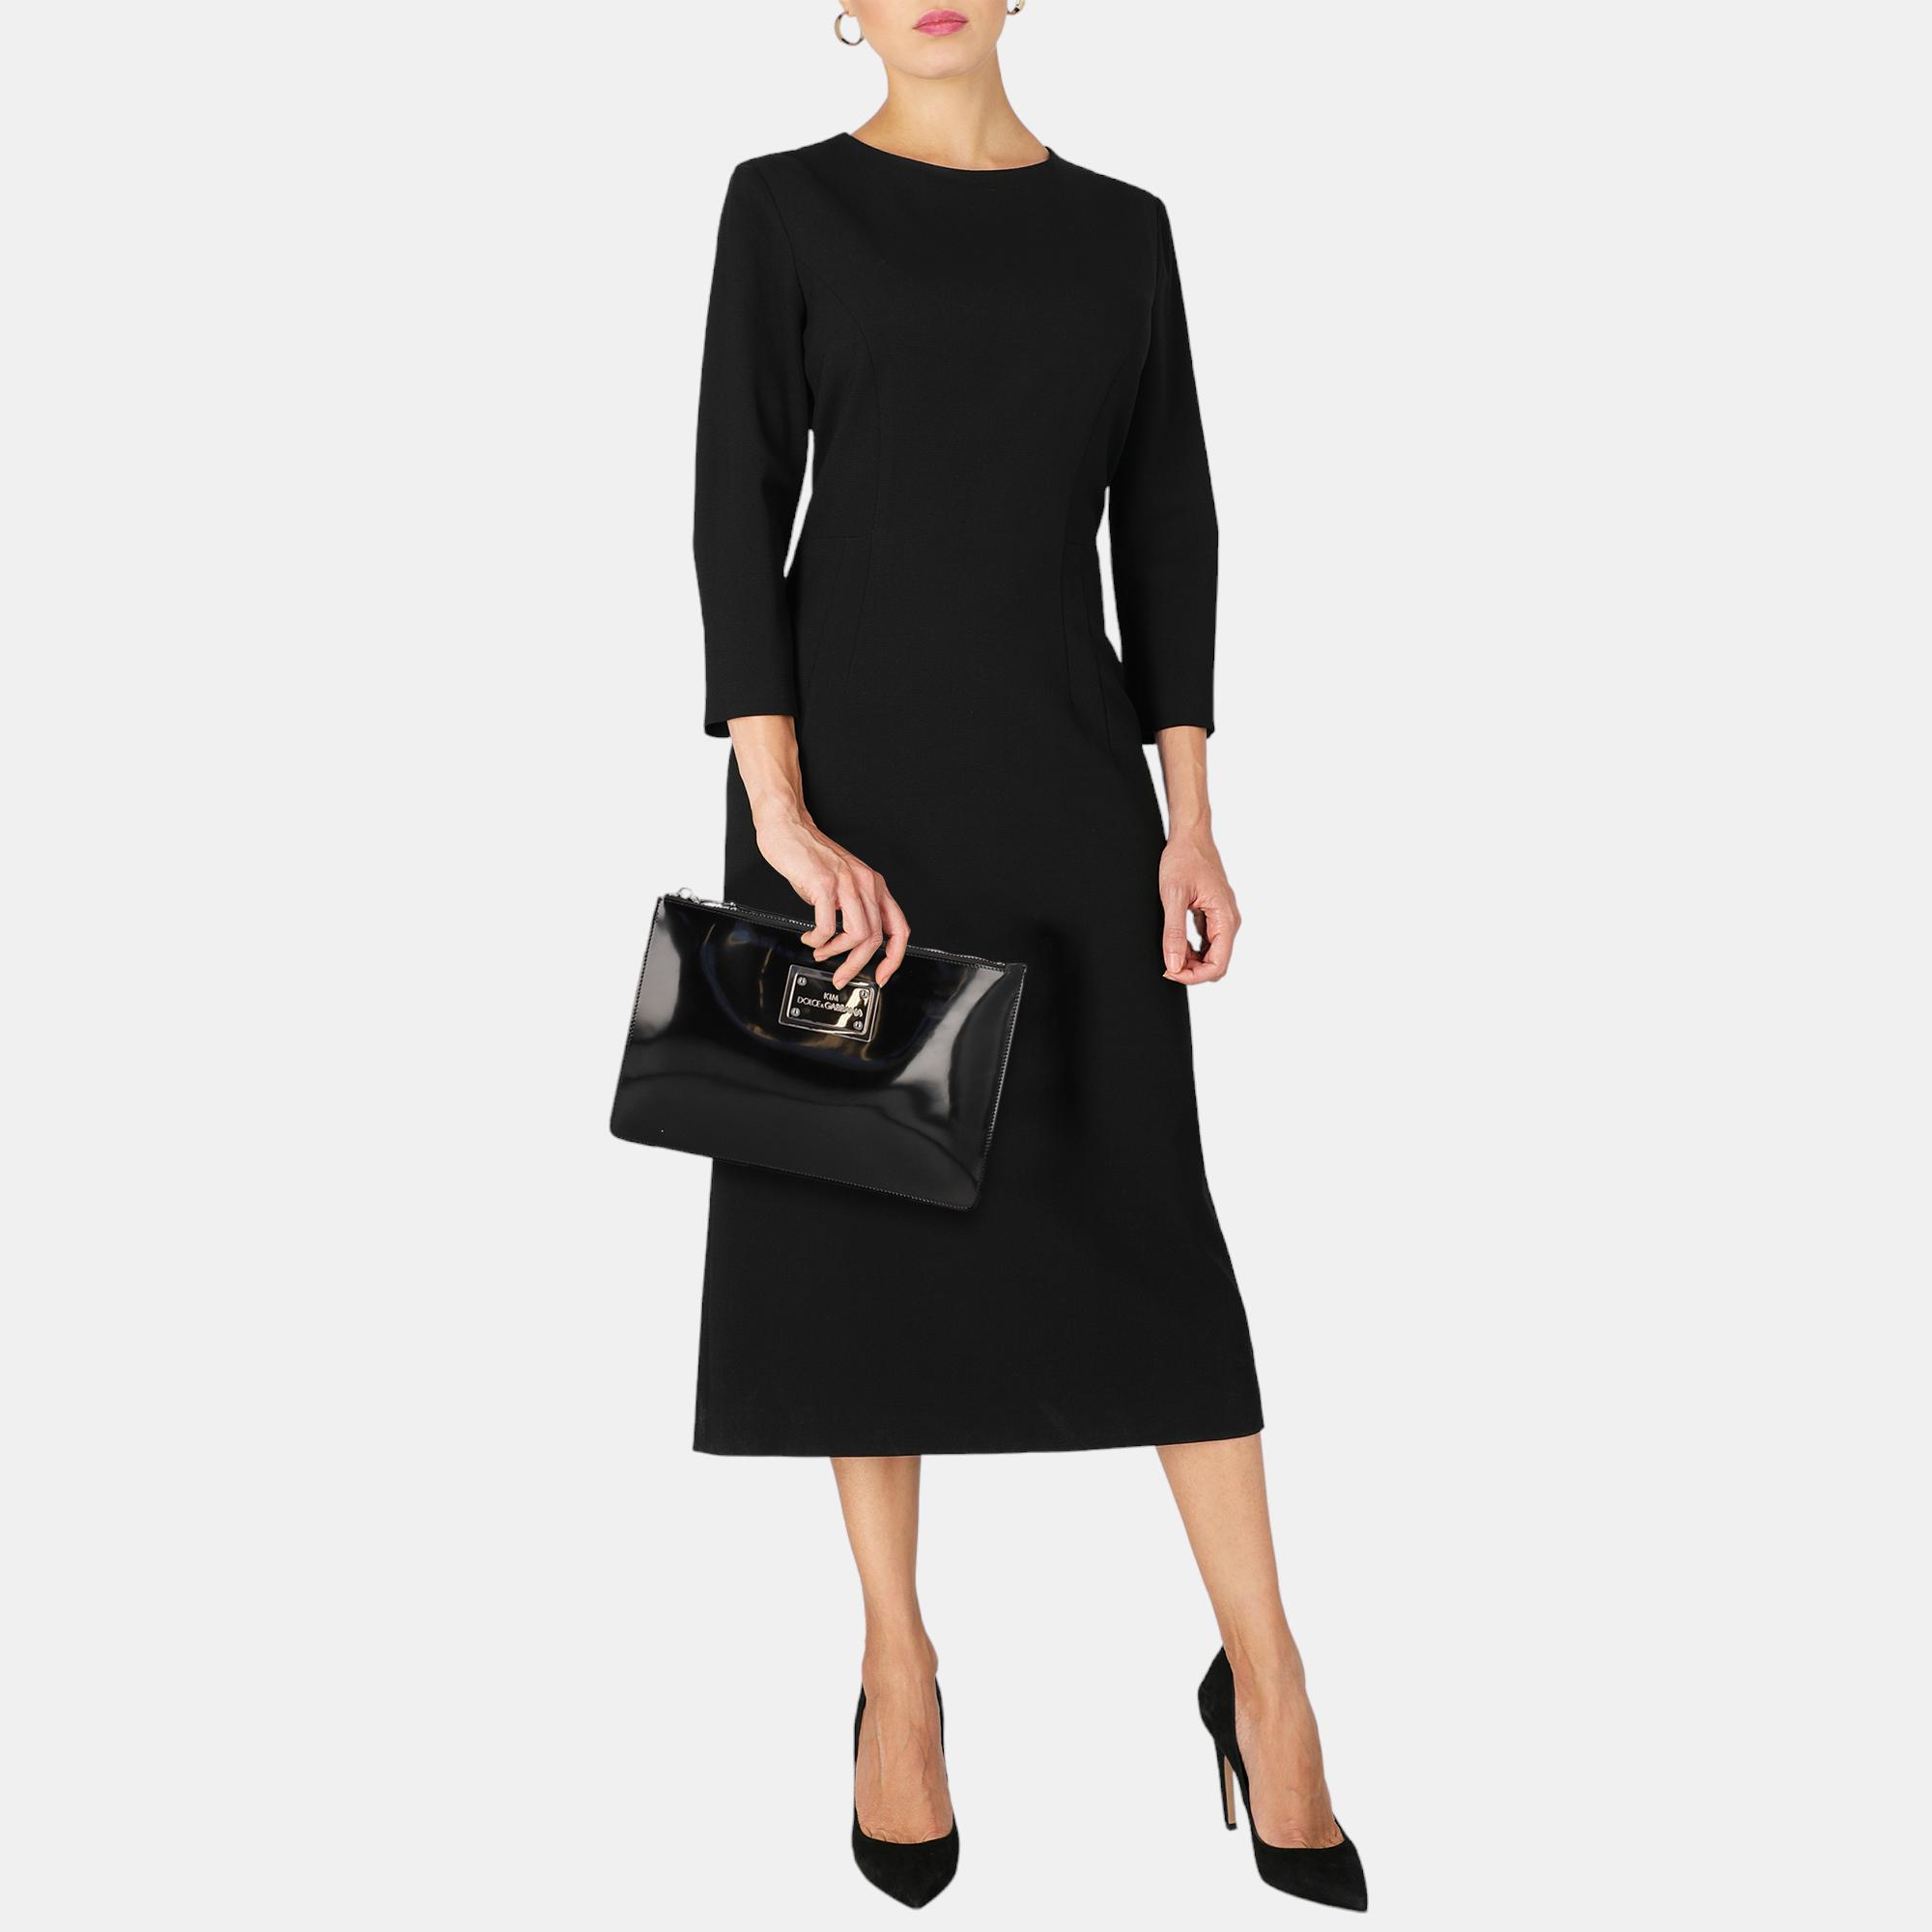 Dolce & Gabbana  Women's Leather Clutch Bag - Black - One Size